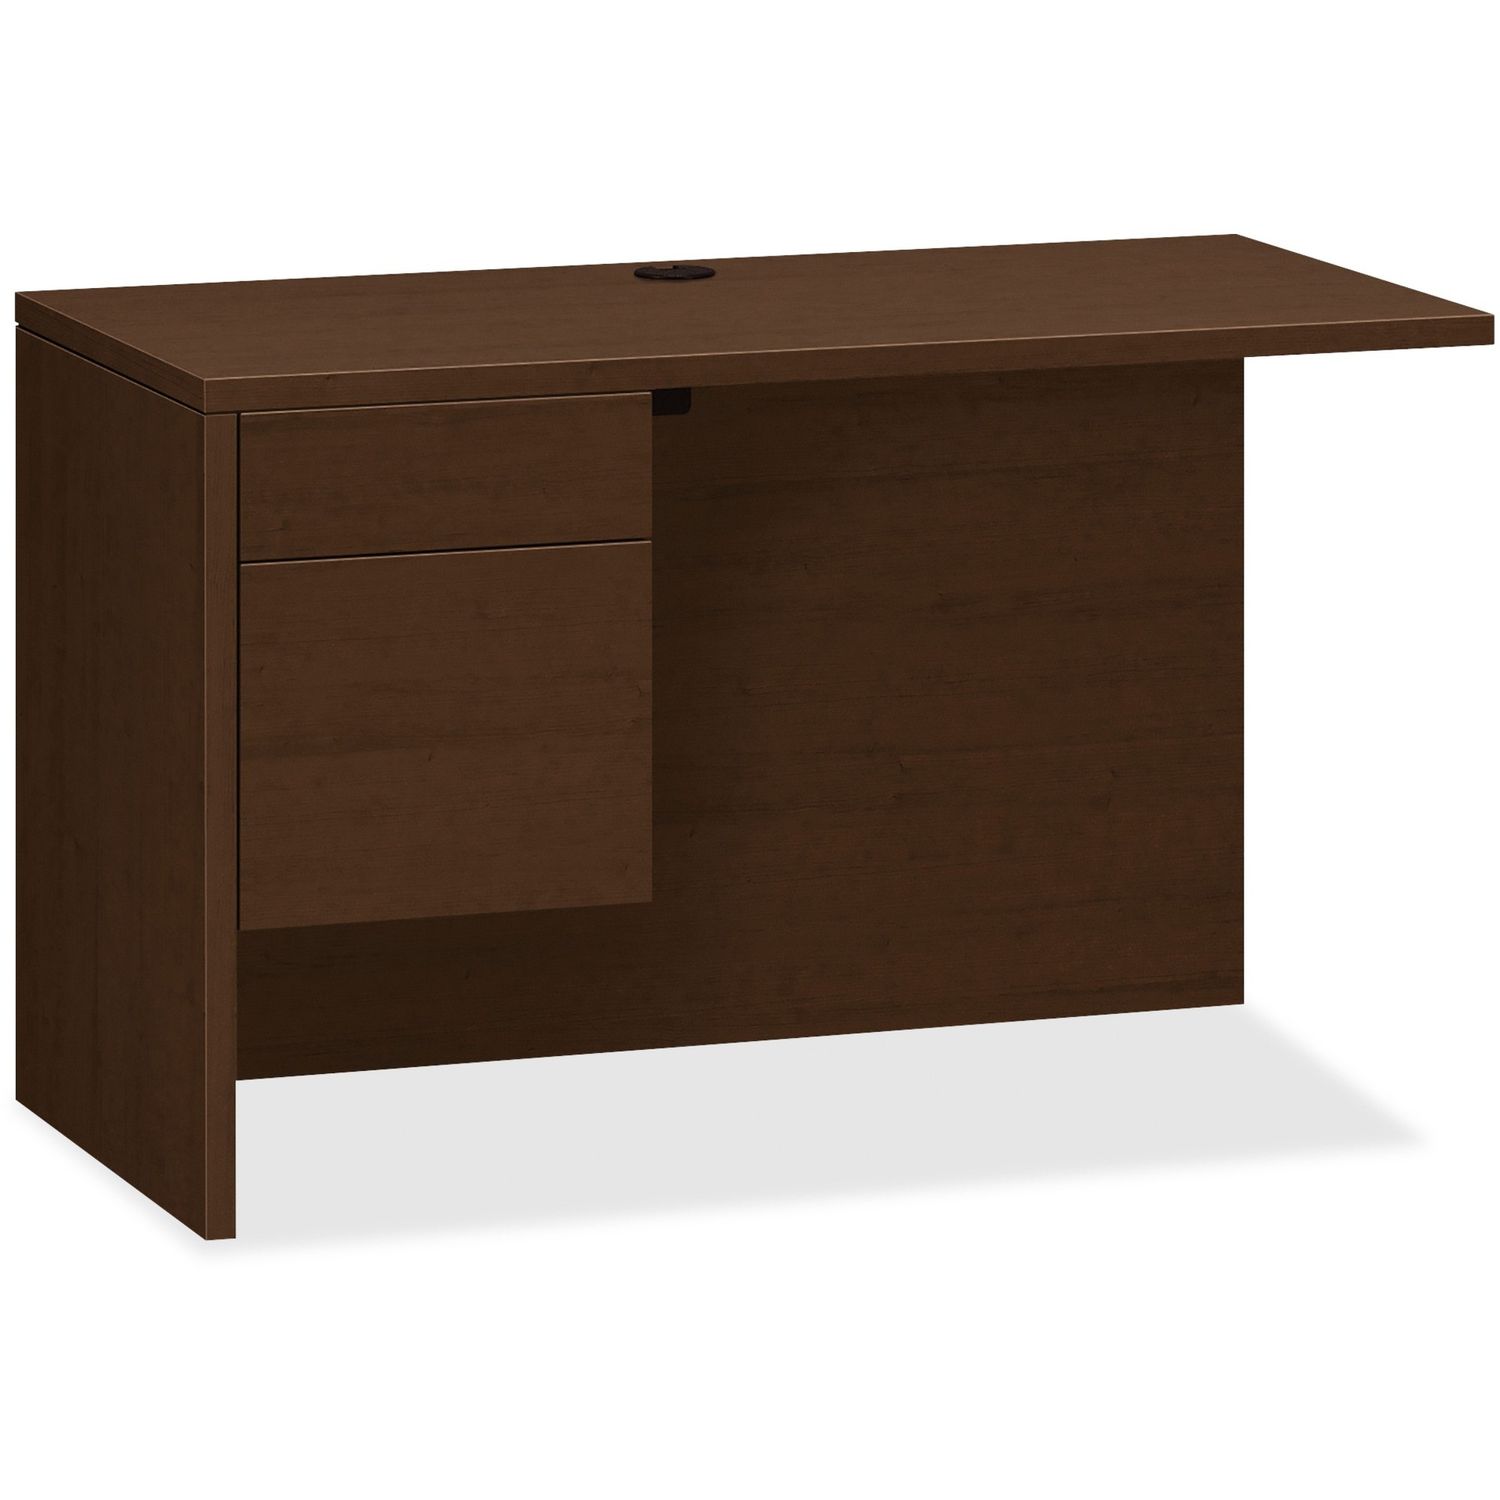 10501 Series Mocha Laminate Furniture Components Return - 2-Drawer 48" x 24"1" Work Surface, 2 x Box Drawer(s), File Drawer(s), Single Pedestal on Left Side, Square Edge